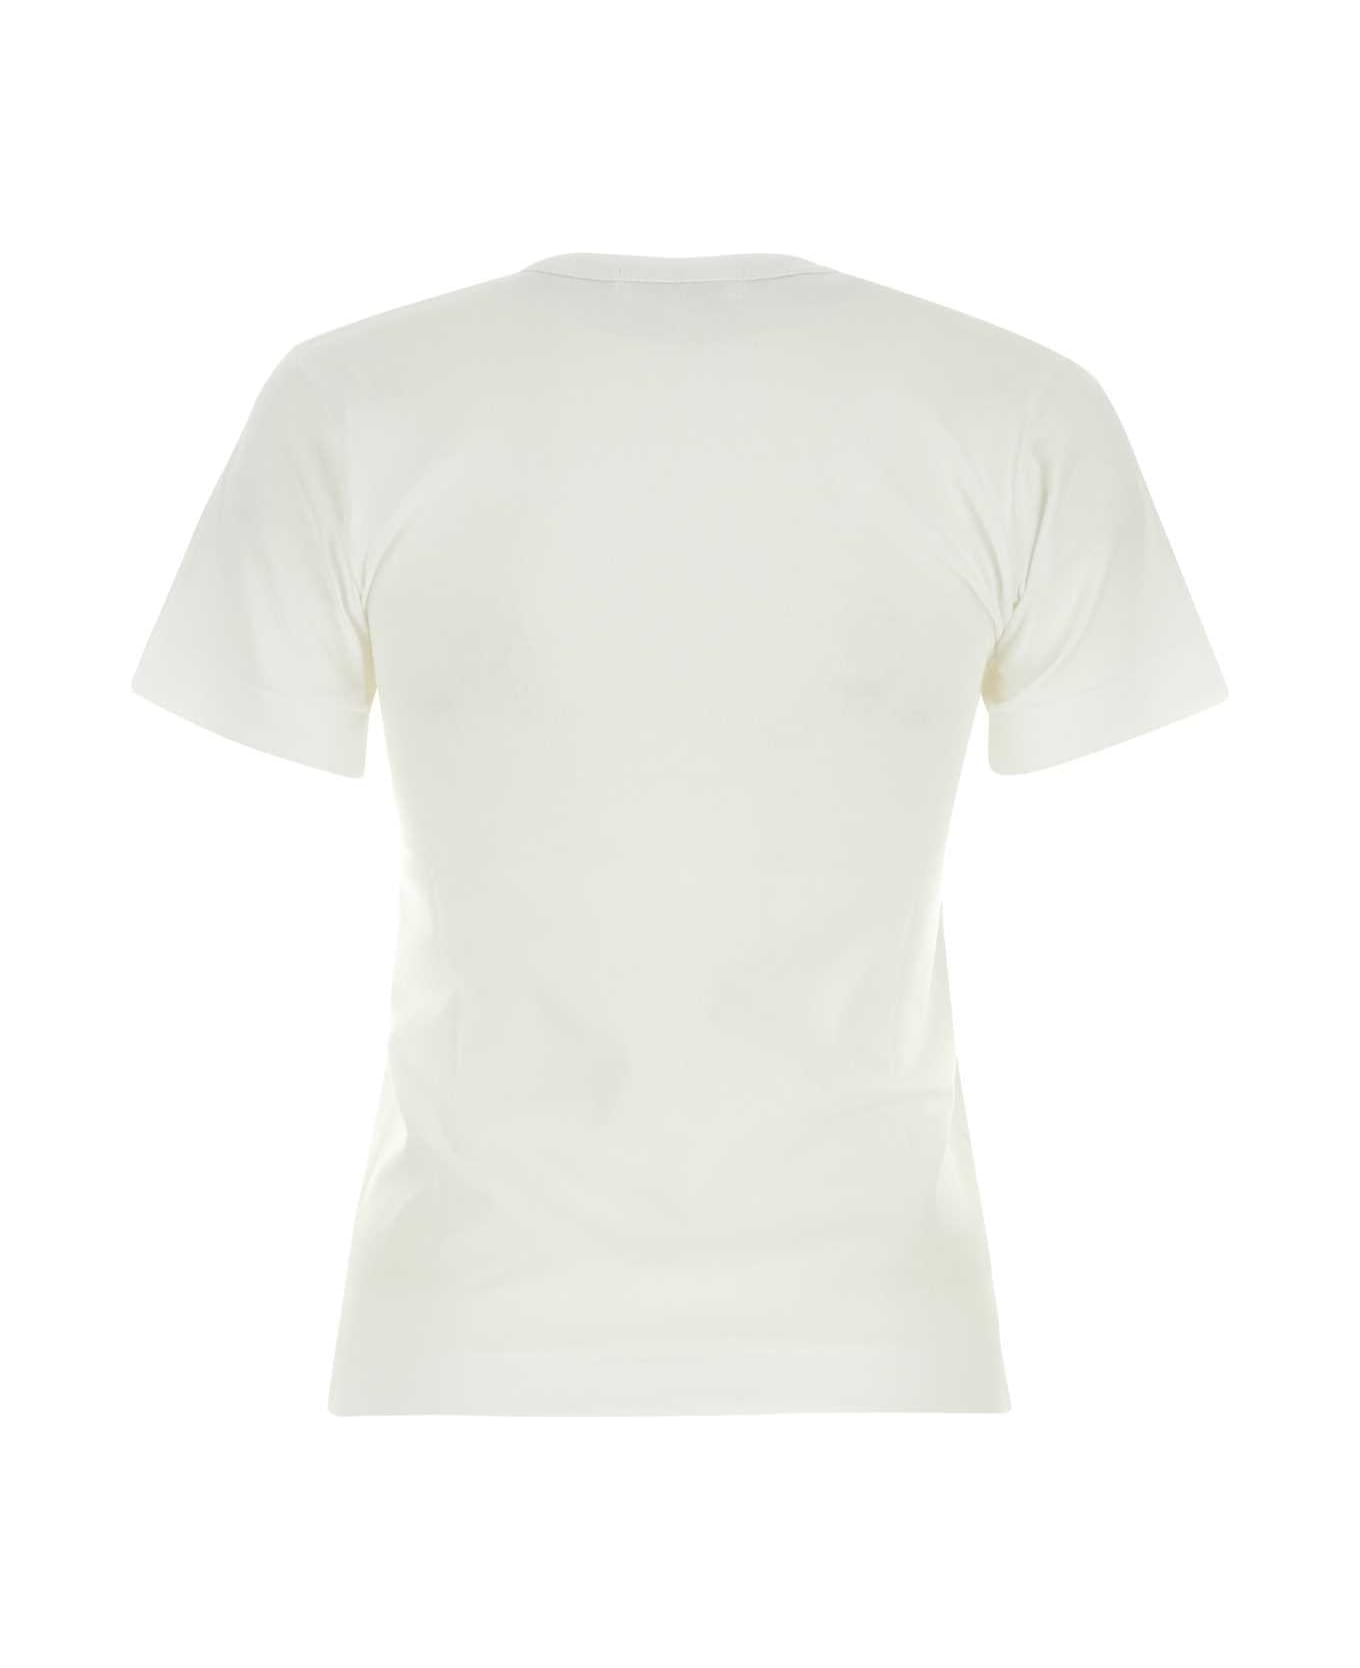 Comme des Garçons Play White Cotton T-shirt - WHTRED